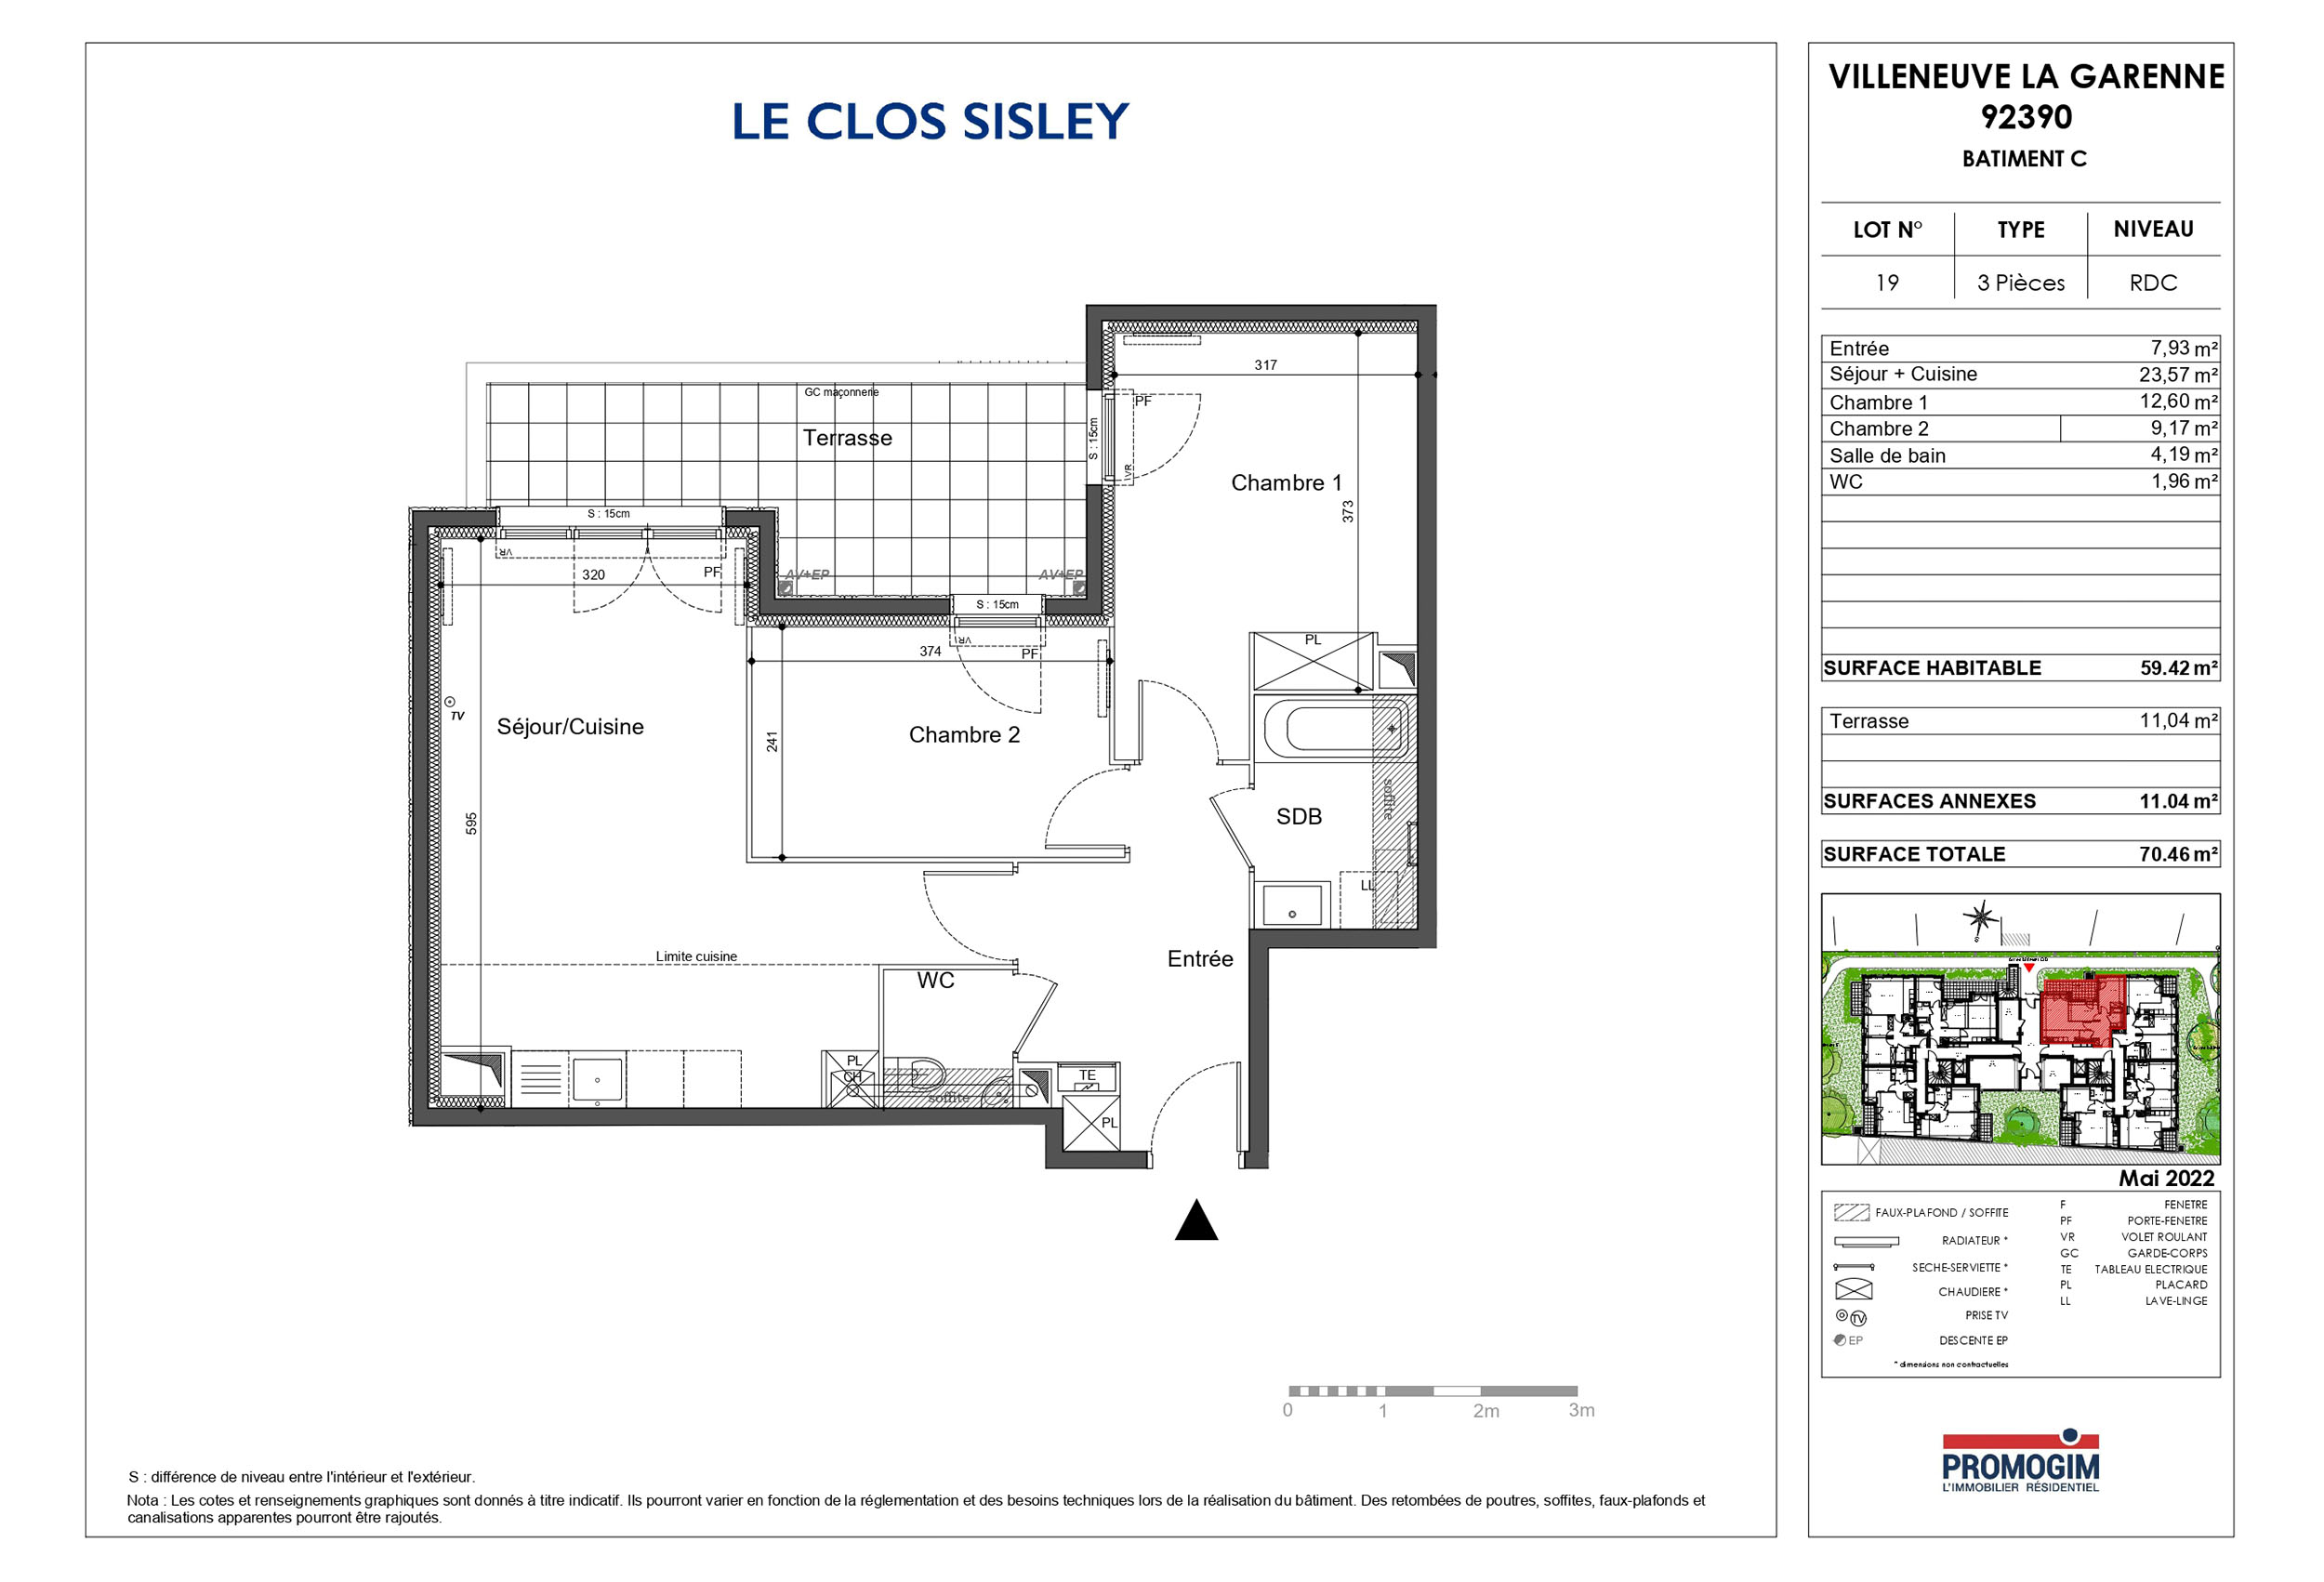 Villeneuve - Clos Sisley - Lot 19